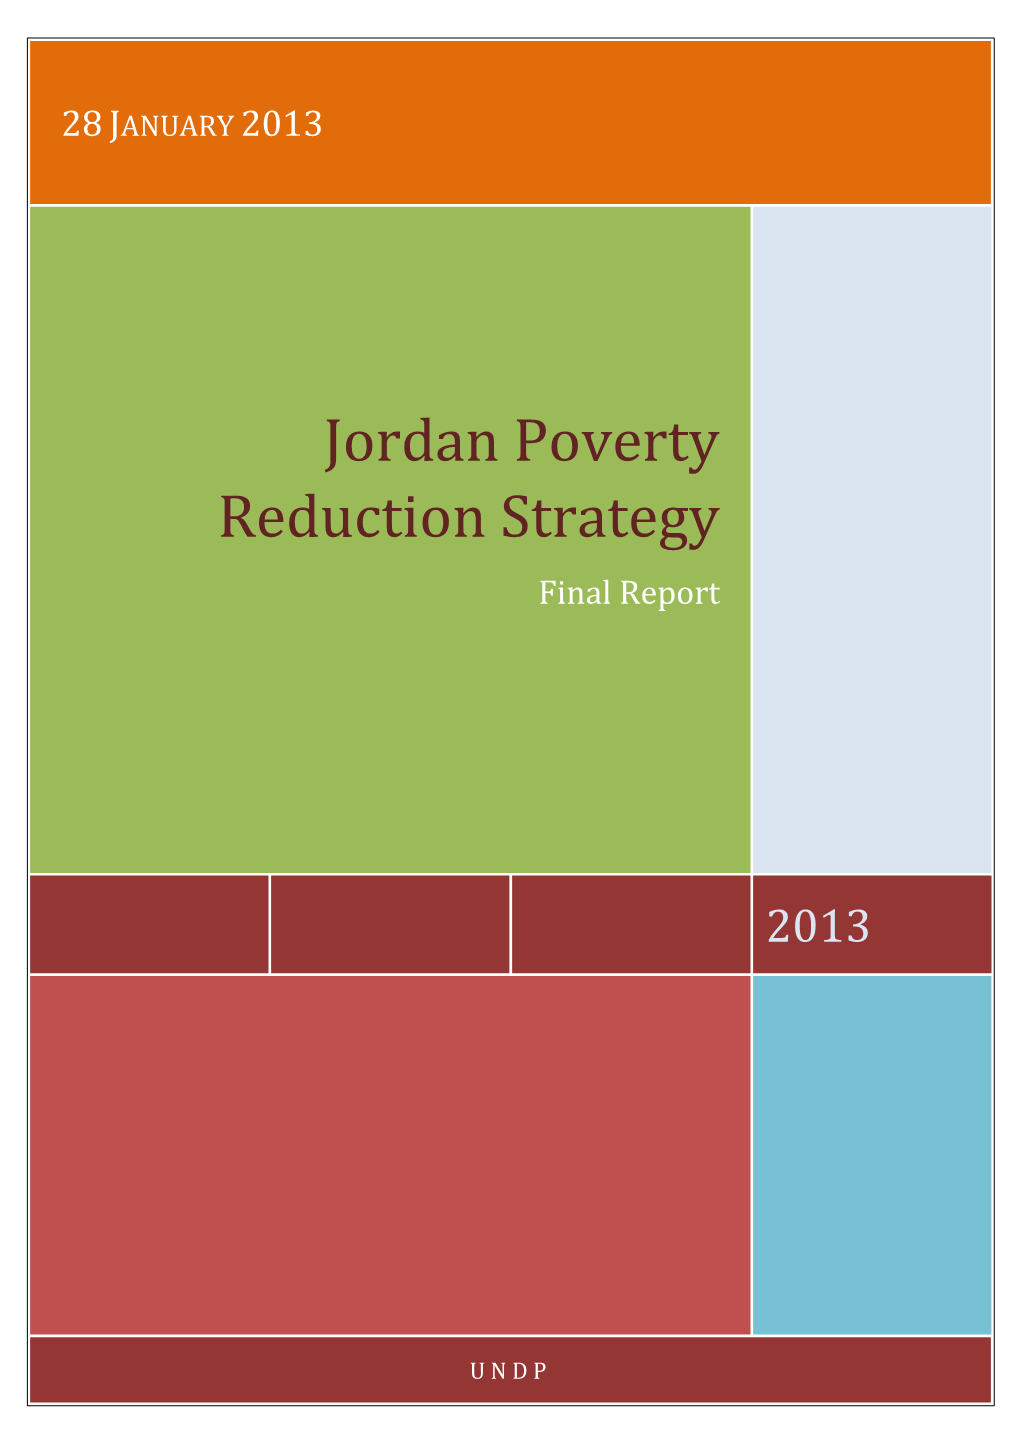 Jordan Poverty Reduction Strategy 2013